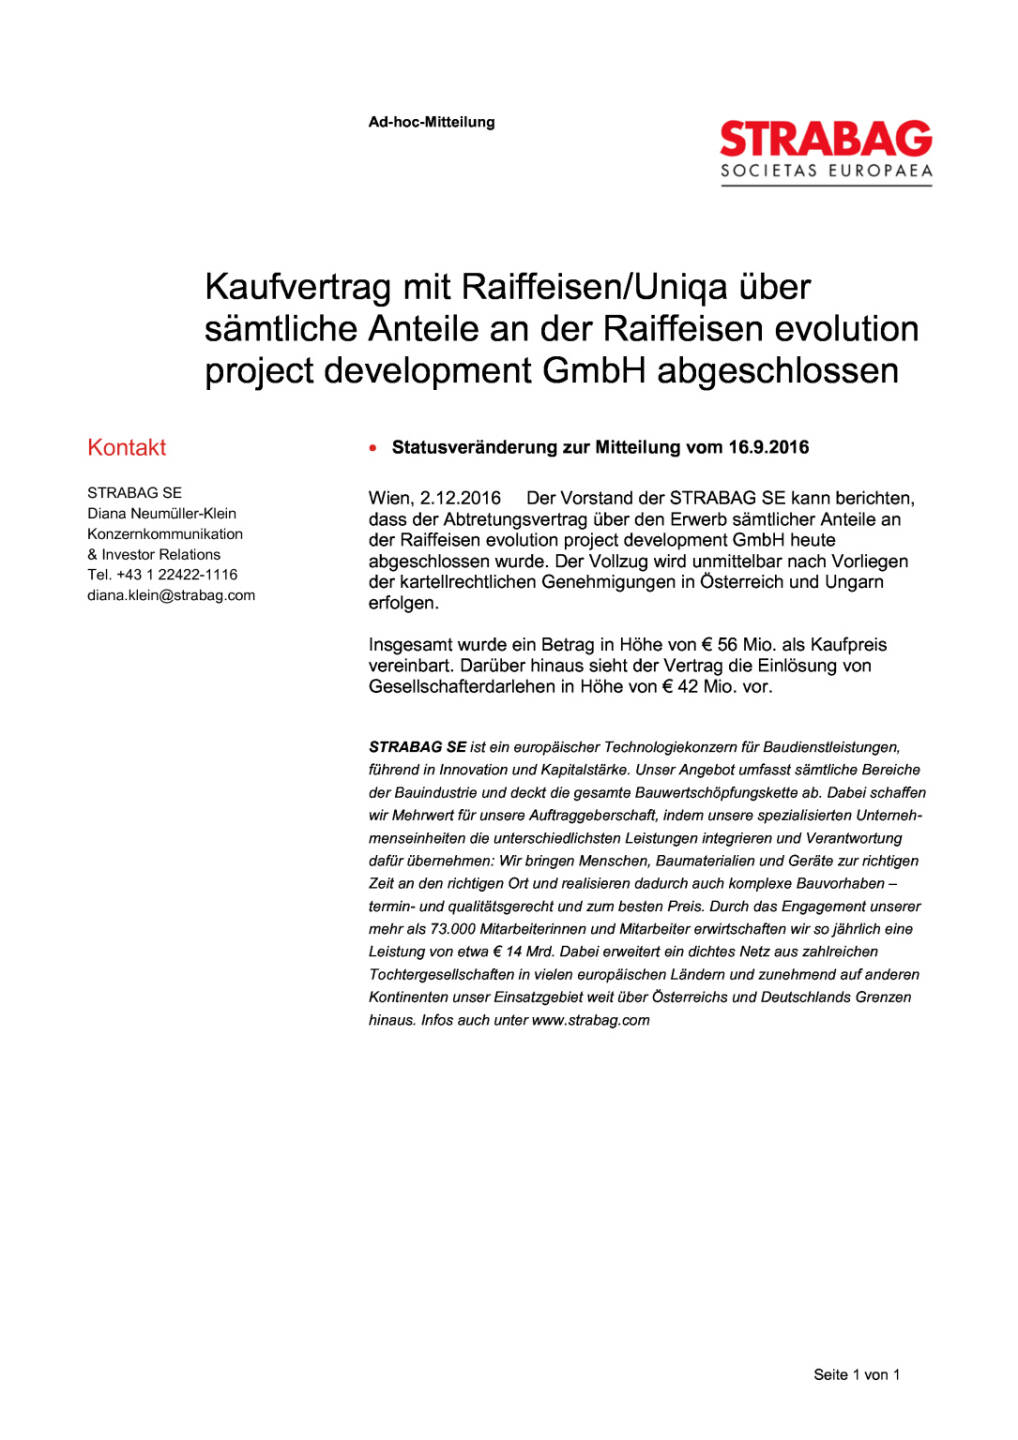 Strabag: Kaufvertrag mit Raiffeisen/Uniqa, Seite 1/1, komplettes Dokument unter http://boerse-social.com/static/uploads/file_2004_strabag_kaufvertrag_mit_raiffeisenuniqa.pdf